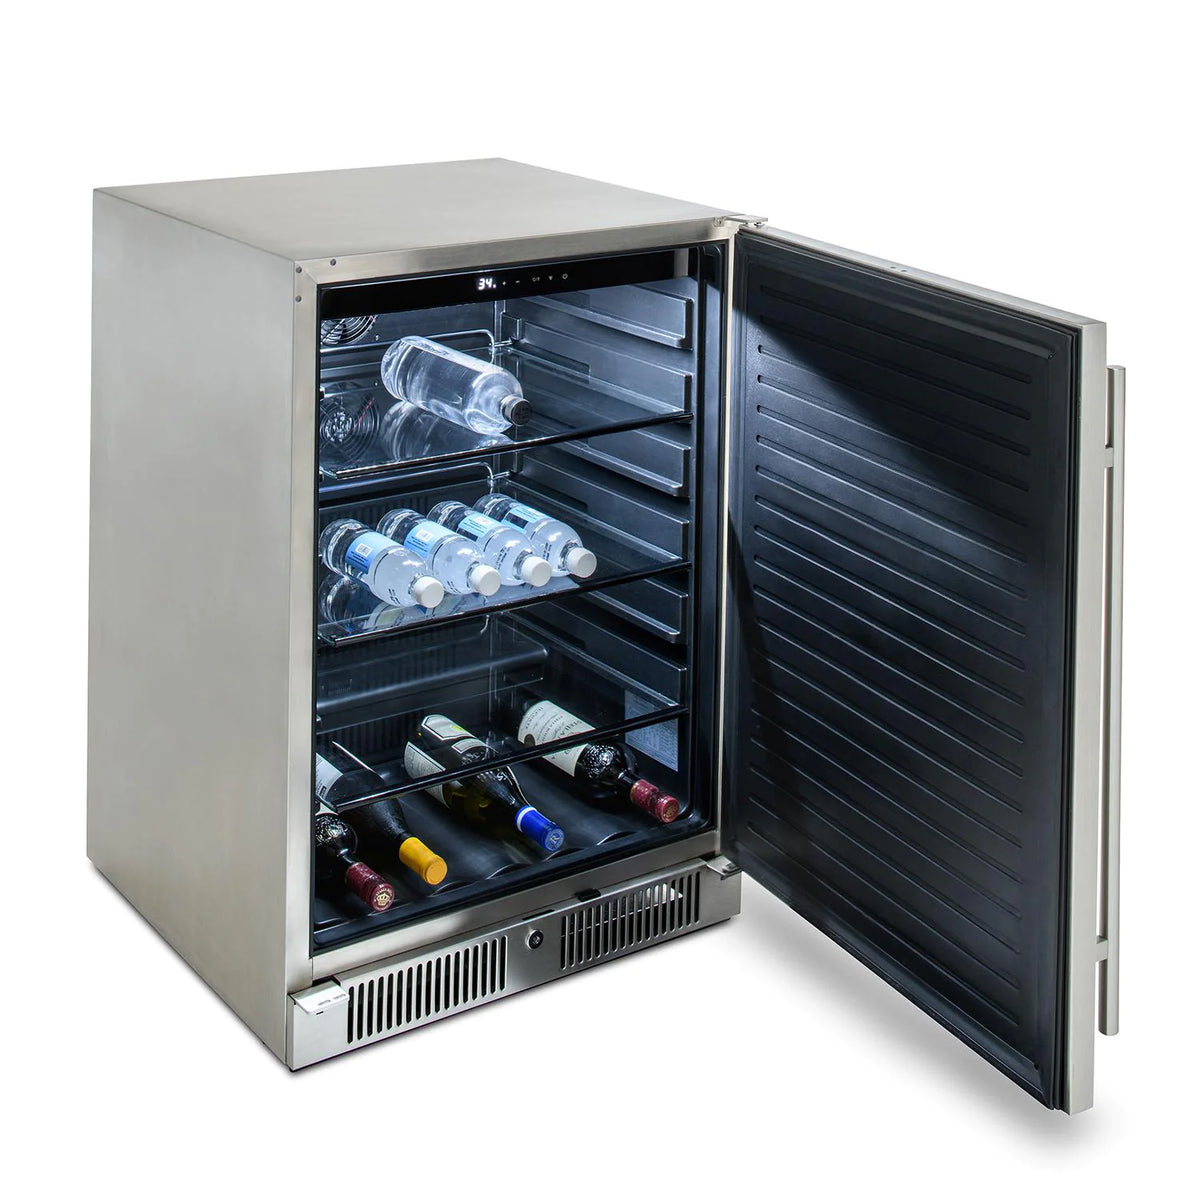 Blaze 24 Inch Outdoor Refrigerator Left Angle View With Door Open and Drinks Inside